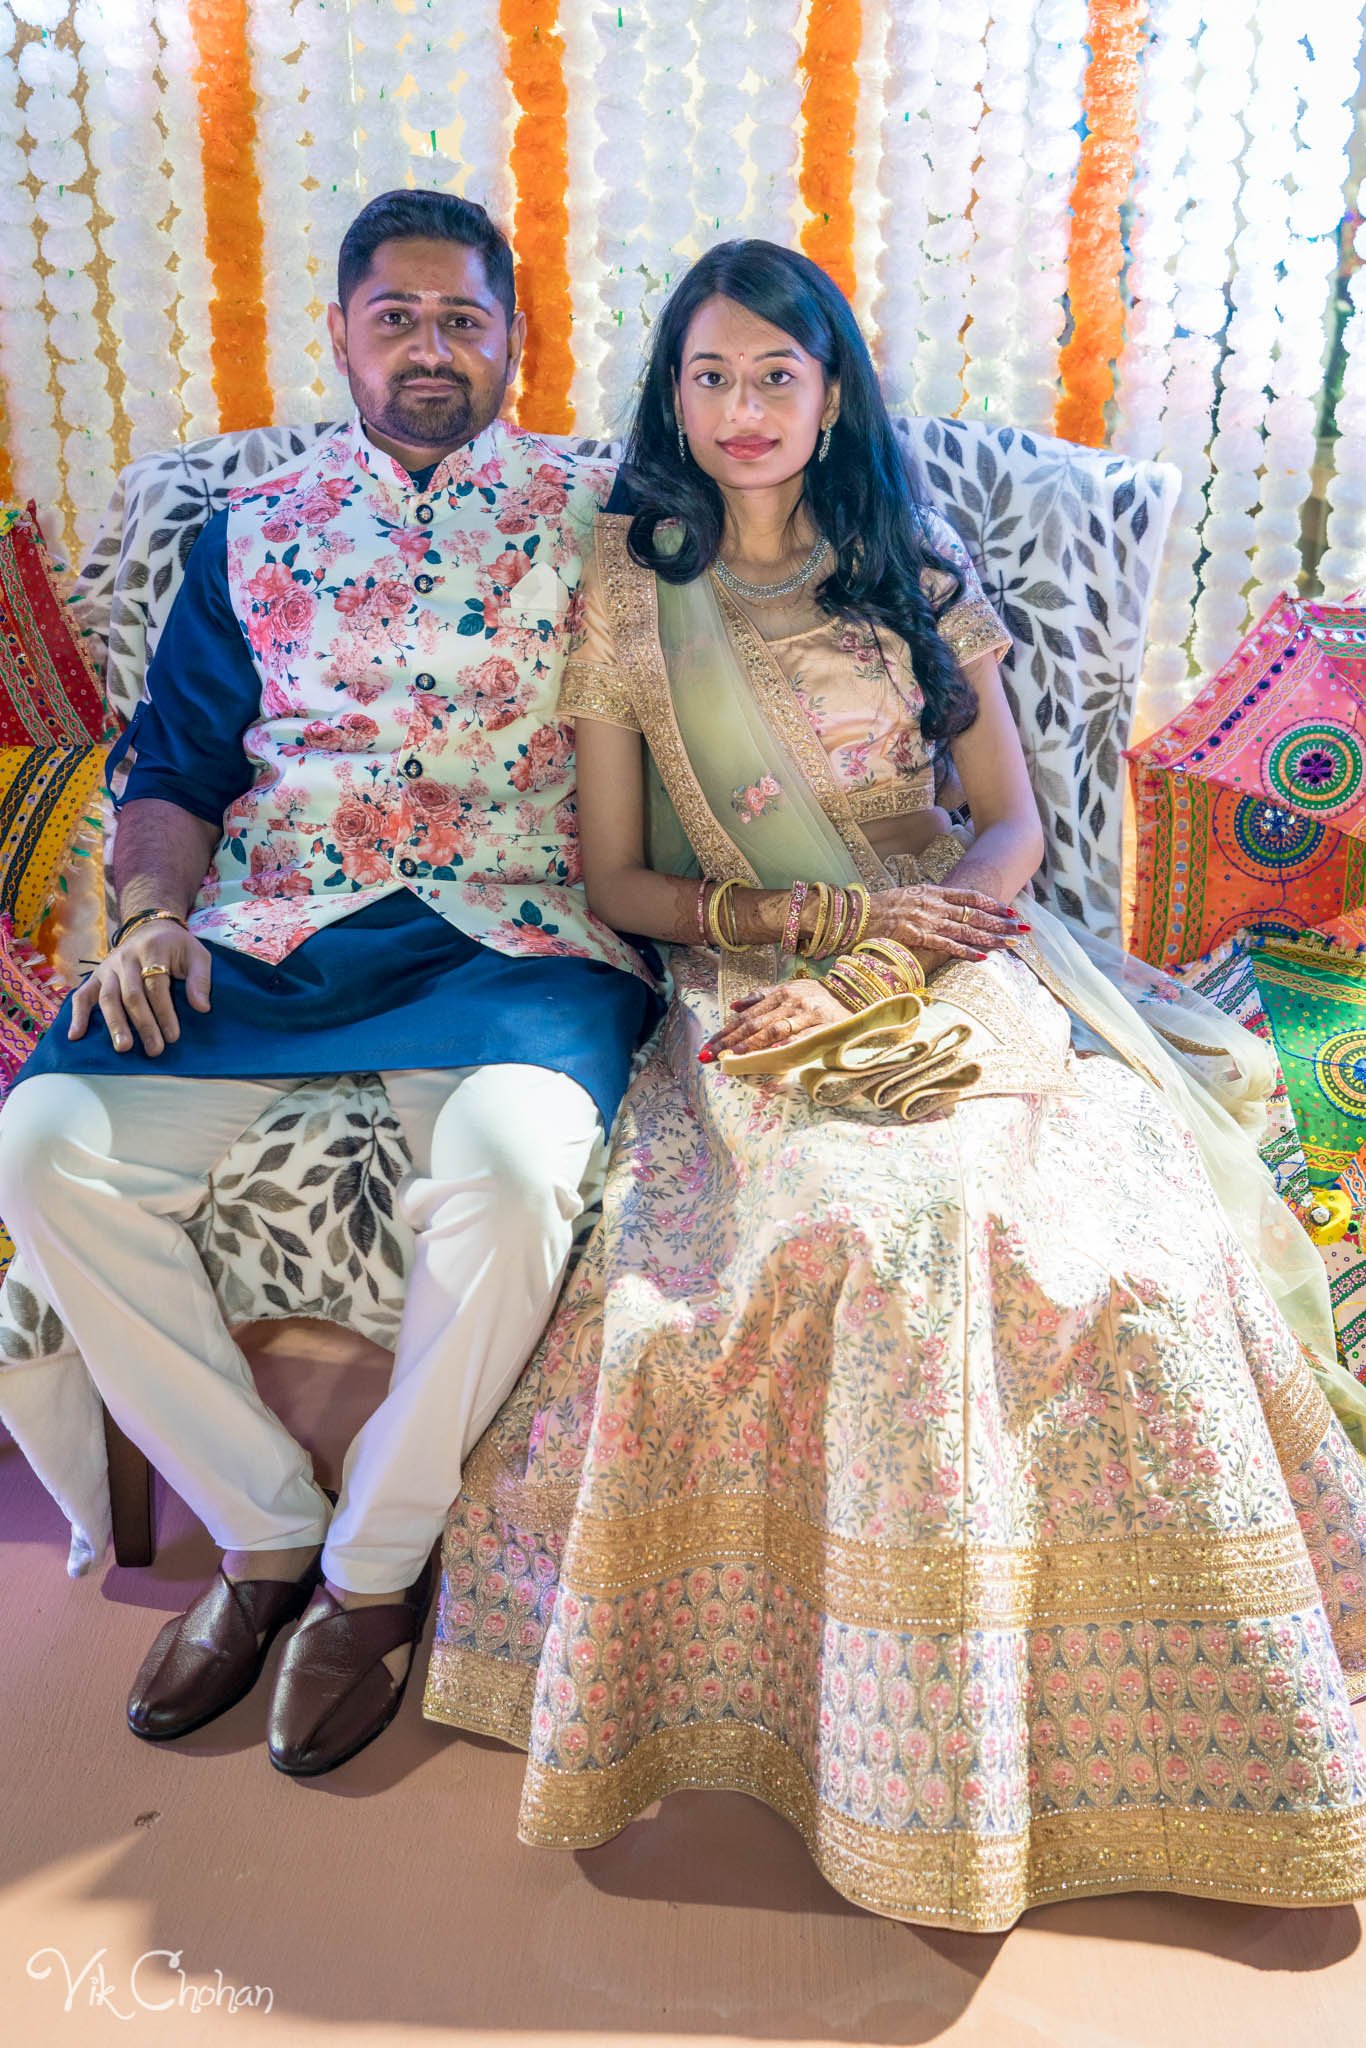 2022-02-04-Hely-&-Parth-Garba-Night-Indian-Wedding-Vik-Chohan-Photography-Photo-Booth-Social-Media-VCP-060.jpg